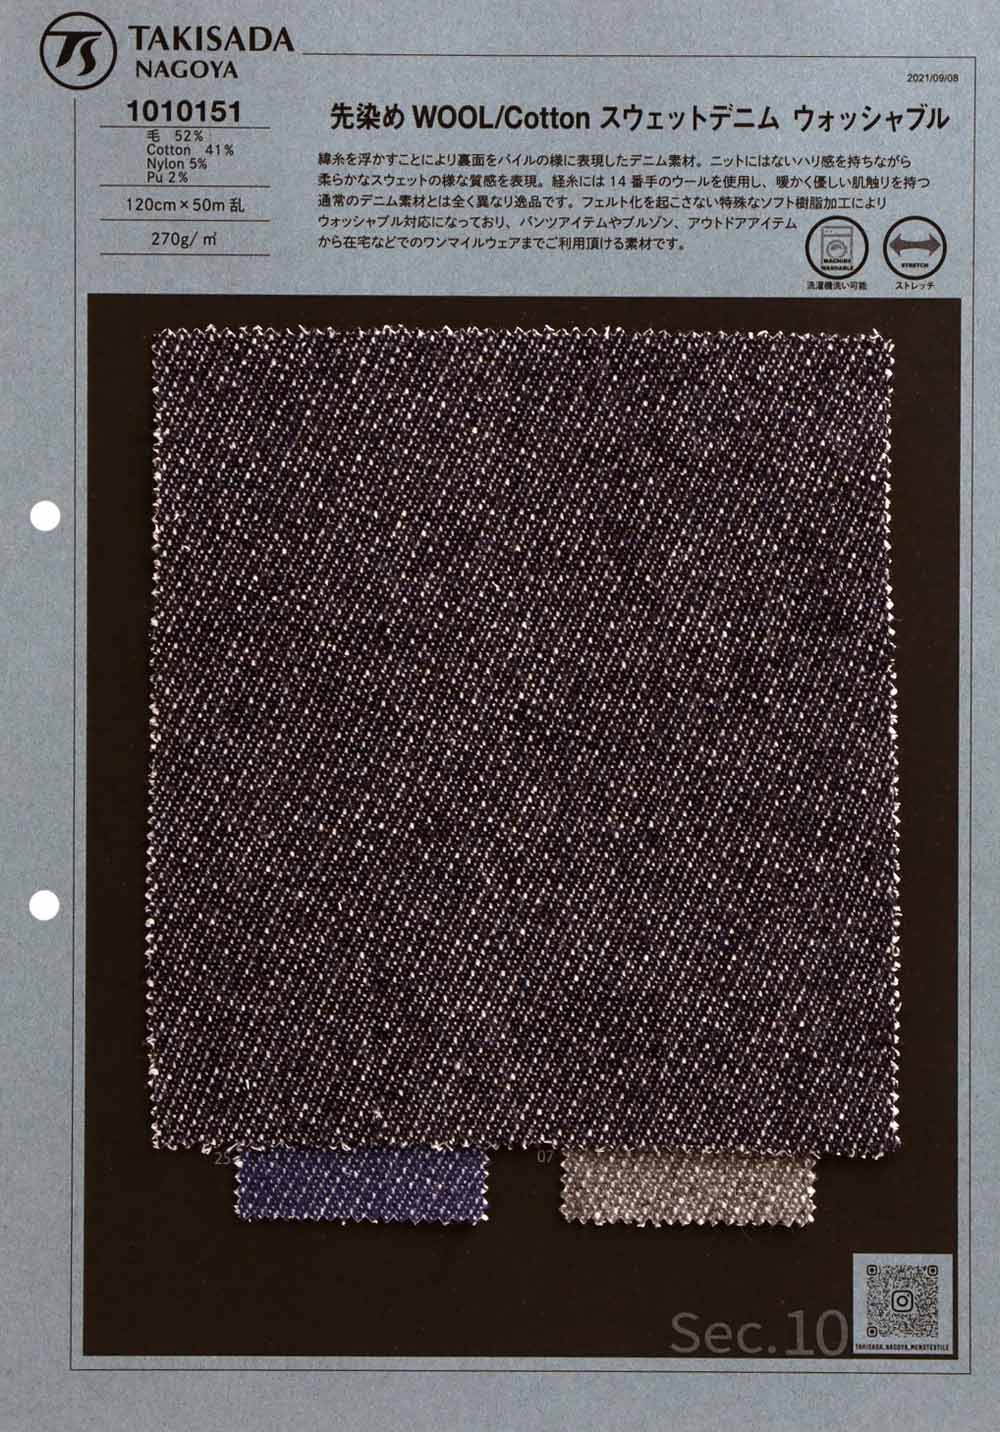 1010151 Wool Cotton Washable Yarn Dyed Sweat Denim[Textile / Fabric] Takisada Nagoya